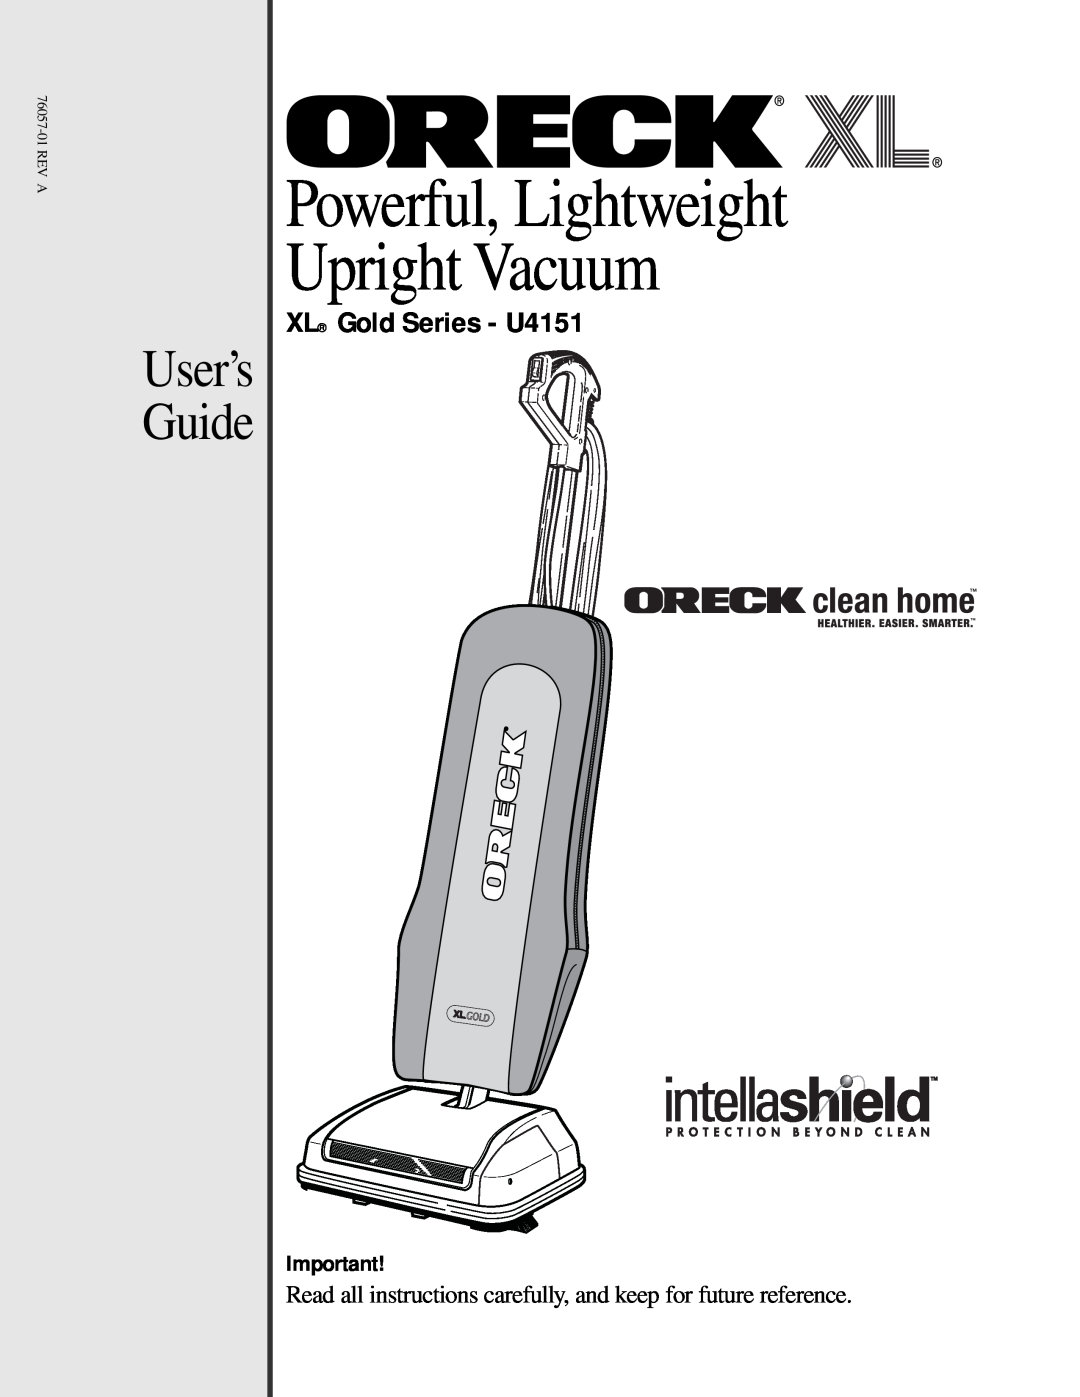 Oreck manual User’s Guide, XL Gold Series - U4151, Powerful, Lightweight Upright Vacuum, 76057-01REV A 